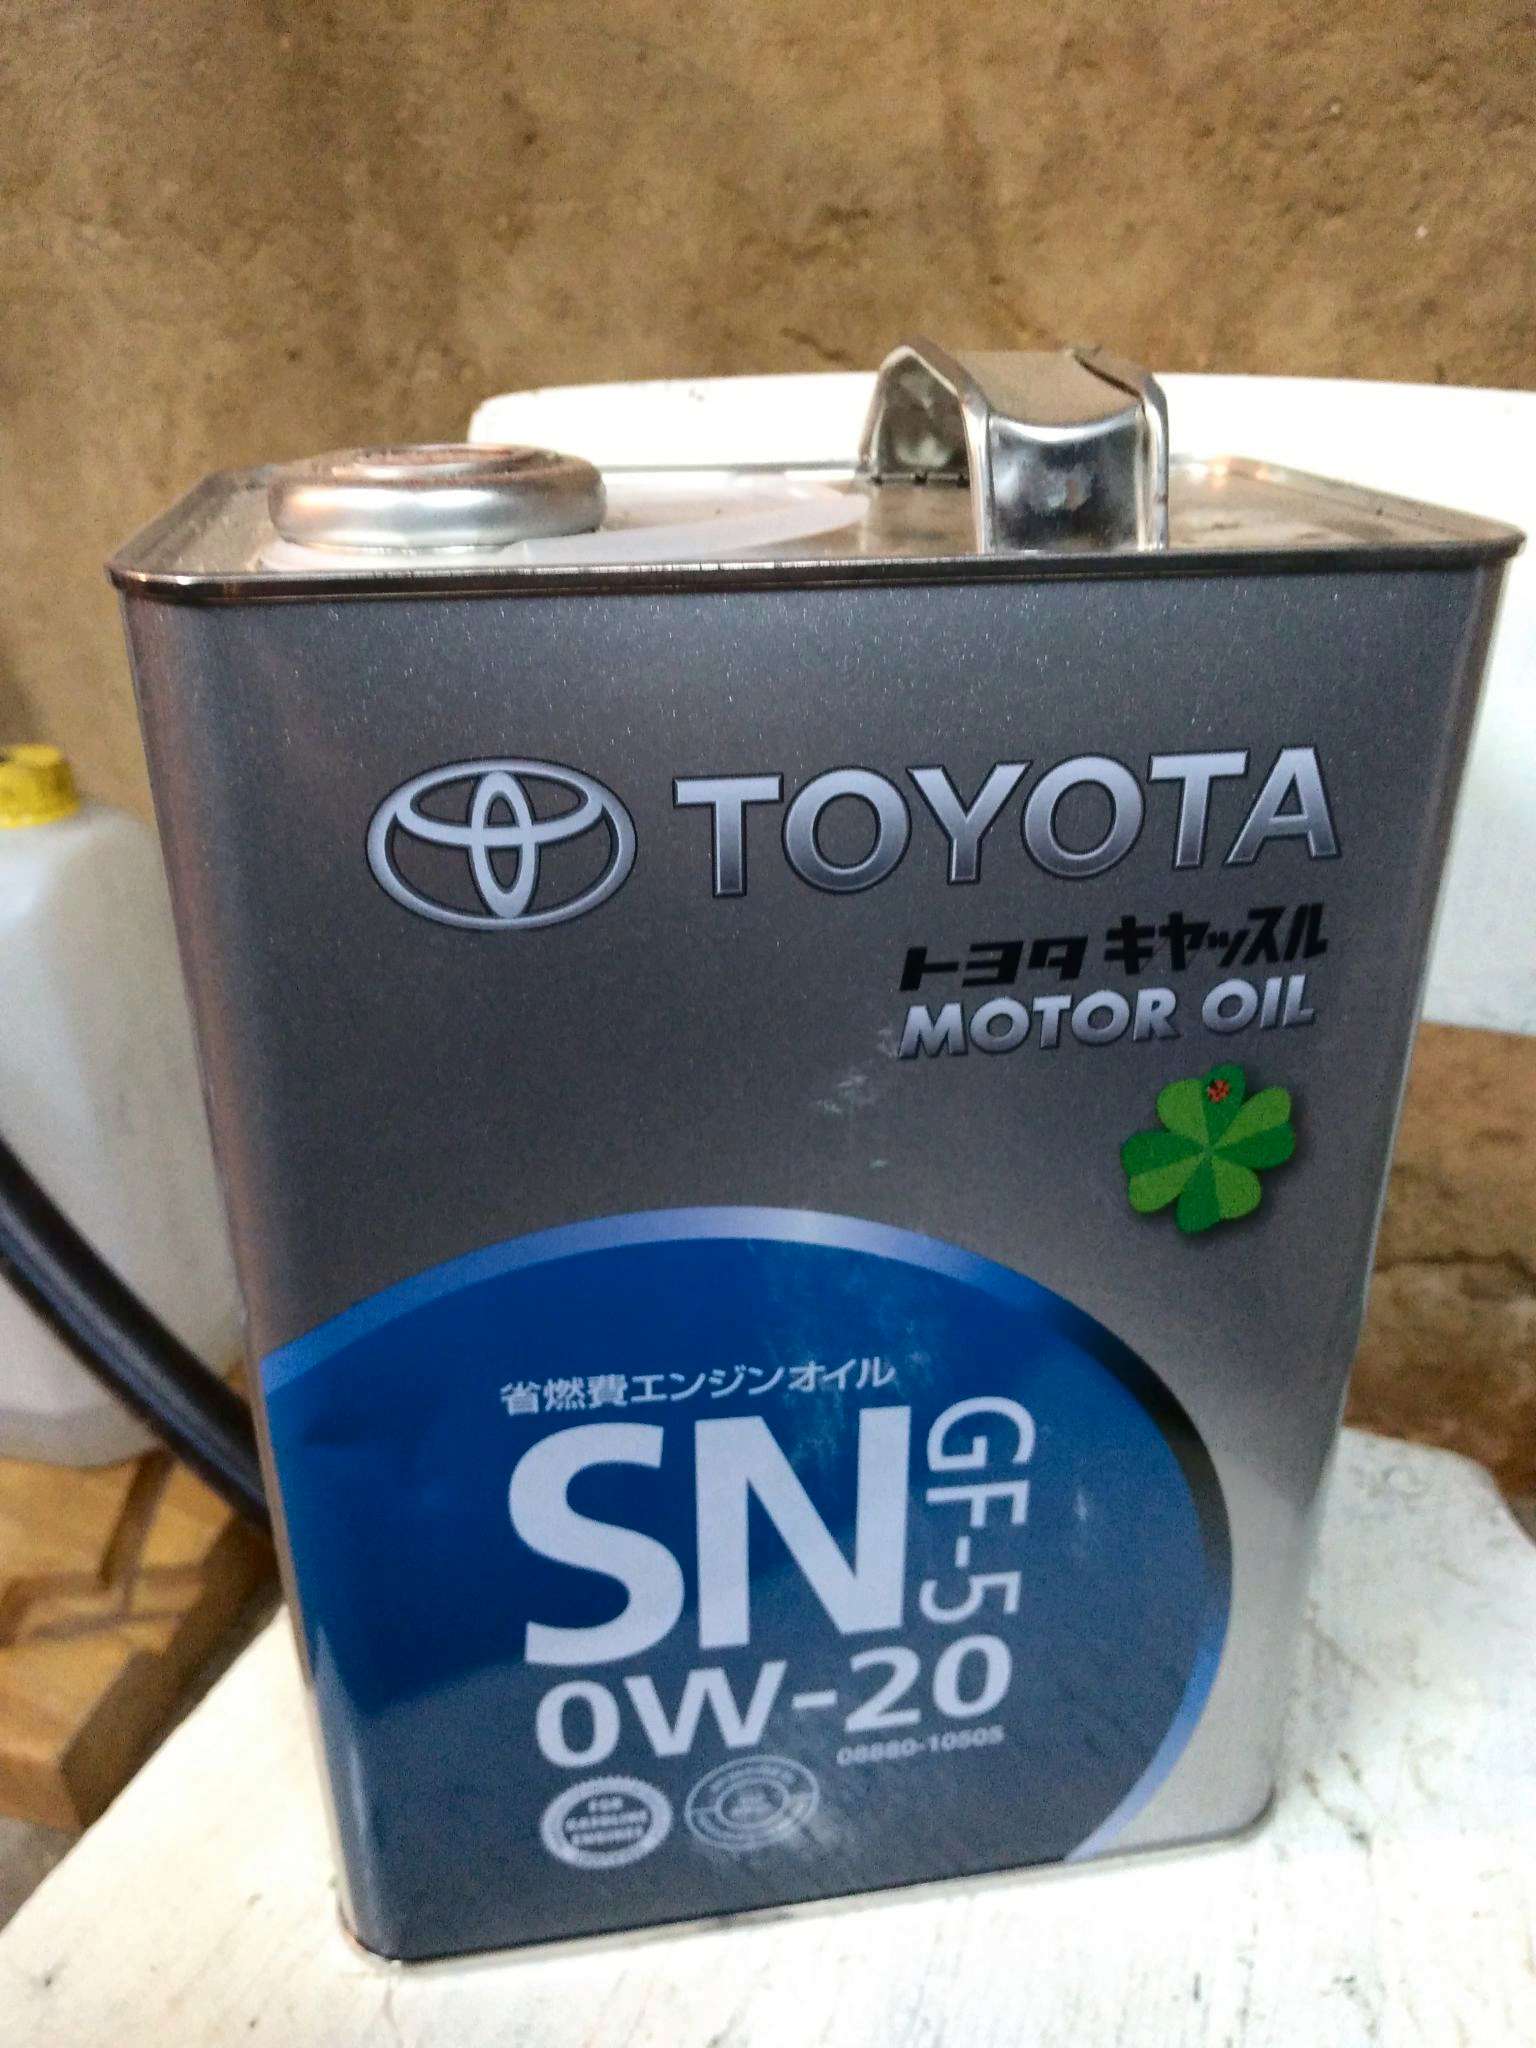 Toyota Motor Oil 0w-20 SN, 4л. Машинное масло на тойоту Виш. 08880-10505 Купить. Масло Селика 23.